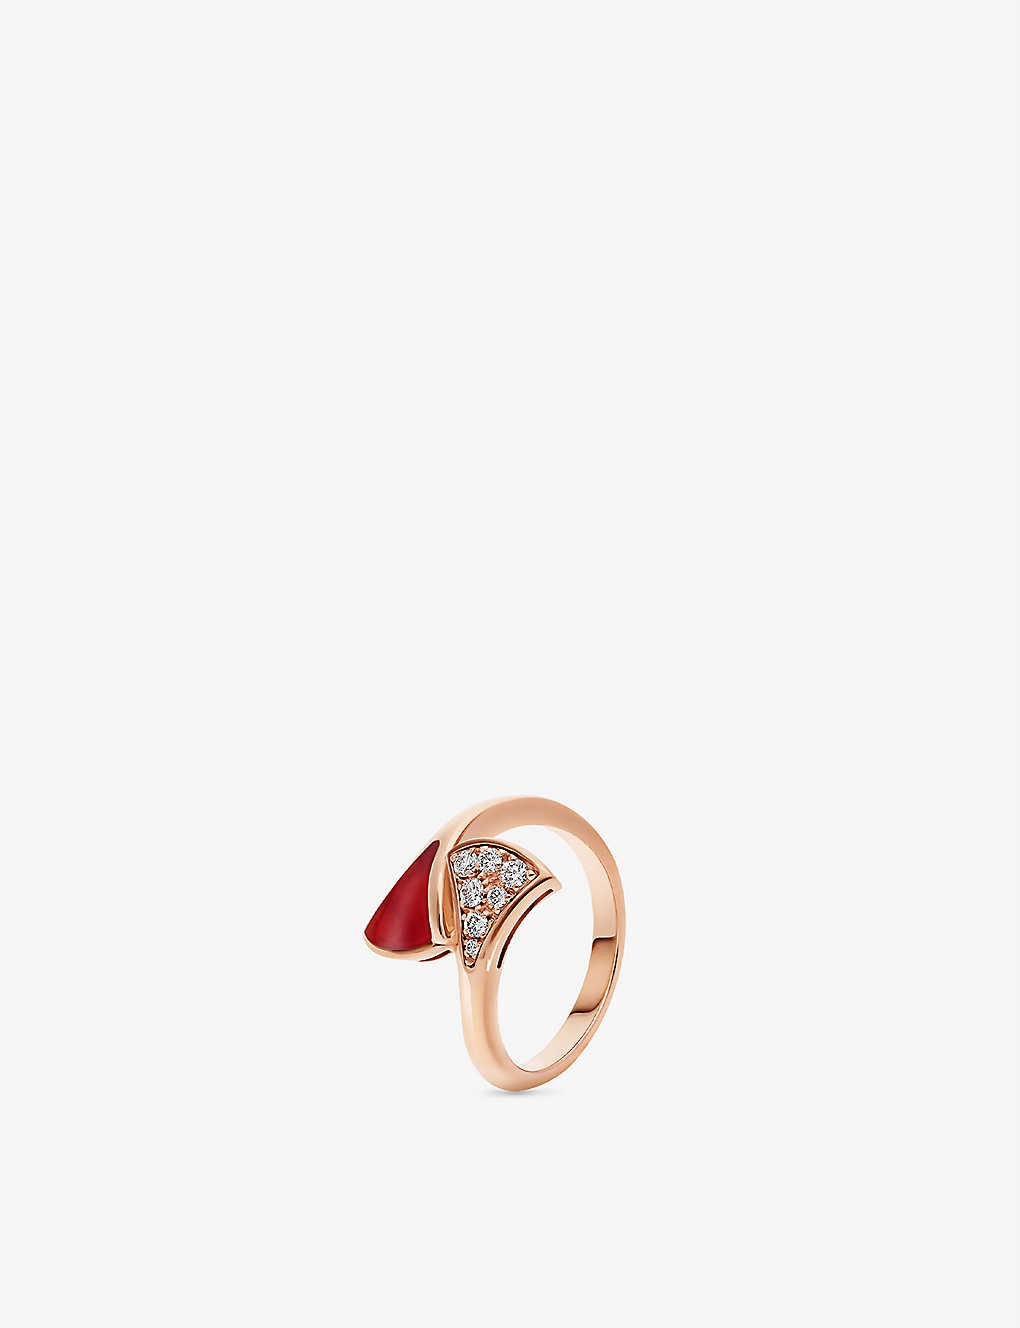 Diva's Dream 18ct rose-gold, carnelian and 0.08ct brilliant-cut diamond ring - 1